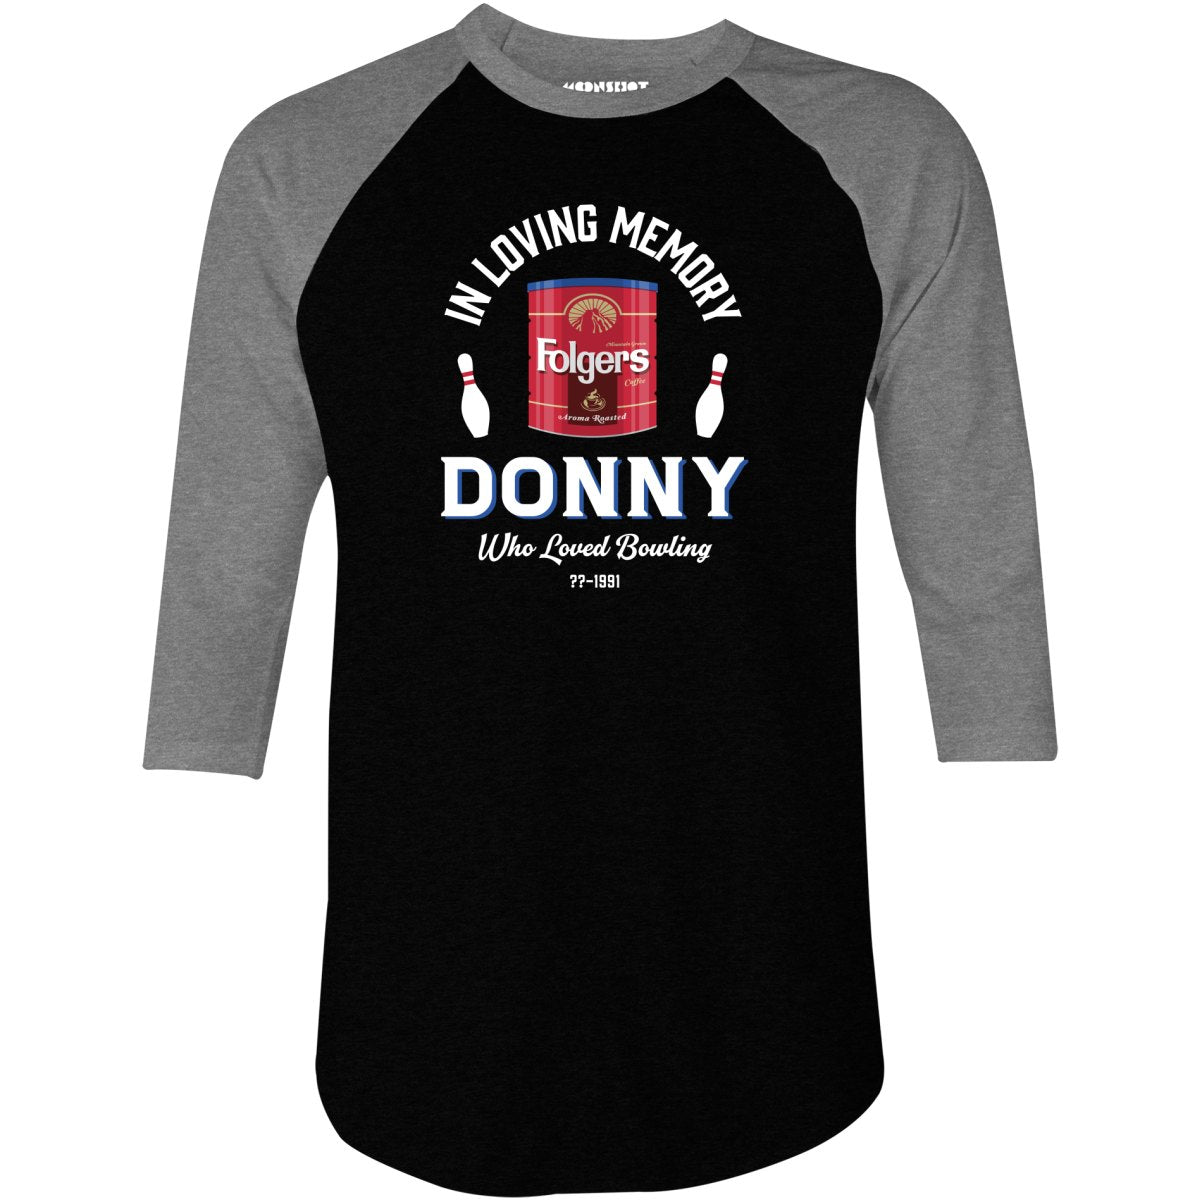 Donny Who Loved Bowling - 3/4 Sleeve Raglan T-Shirt